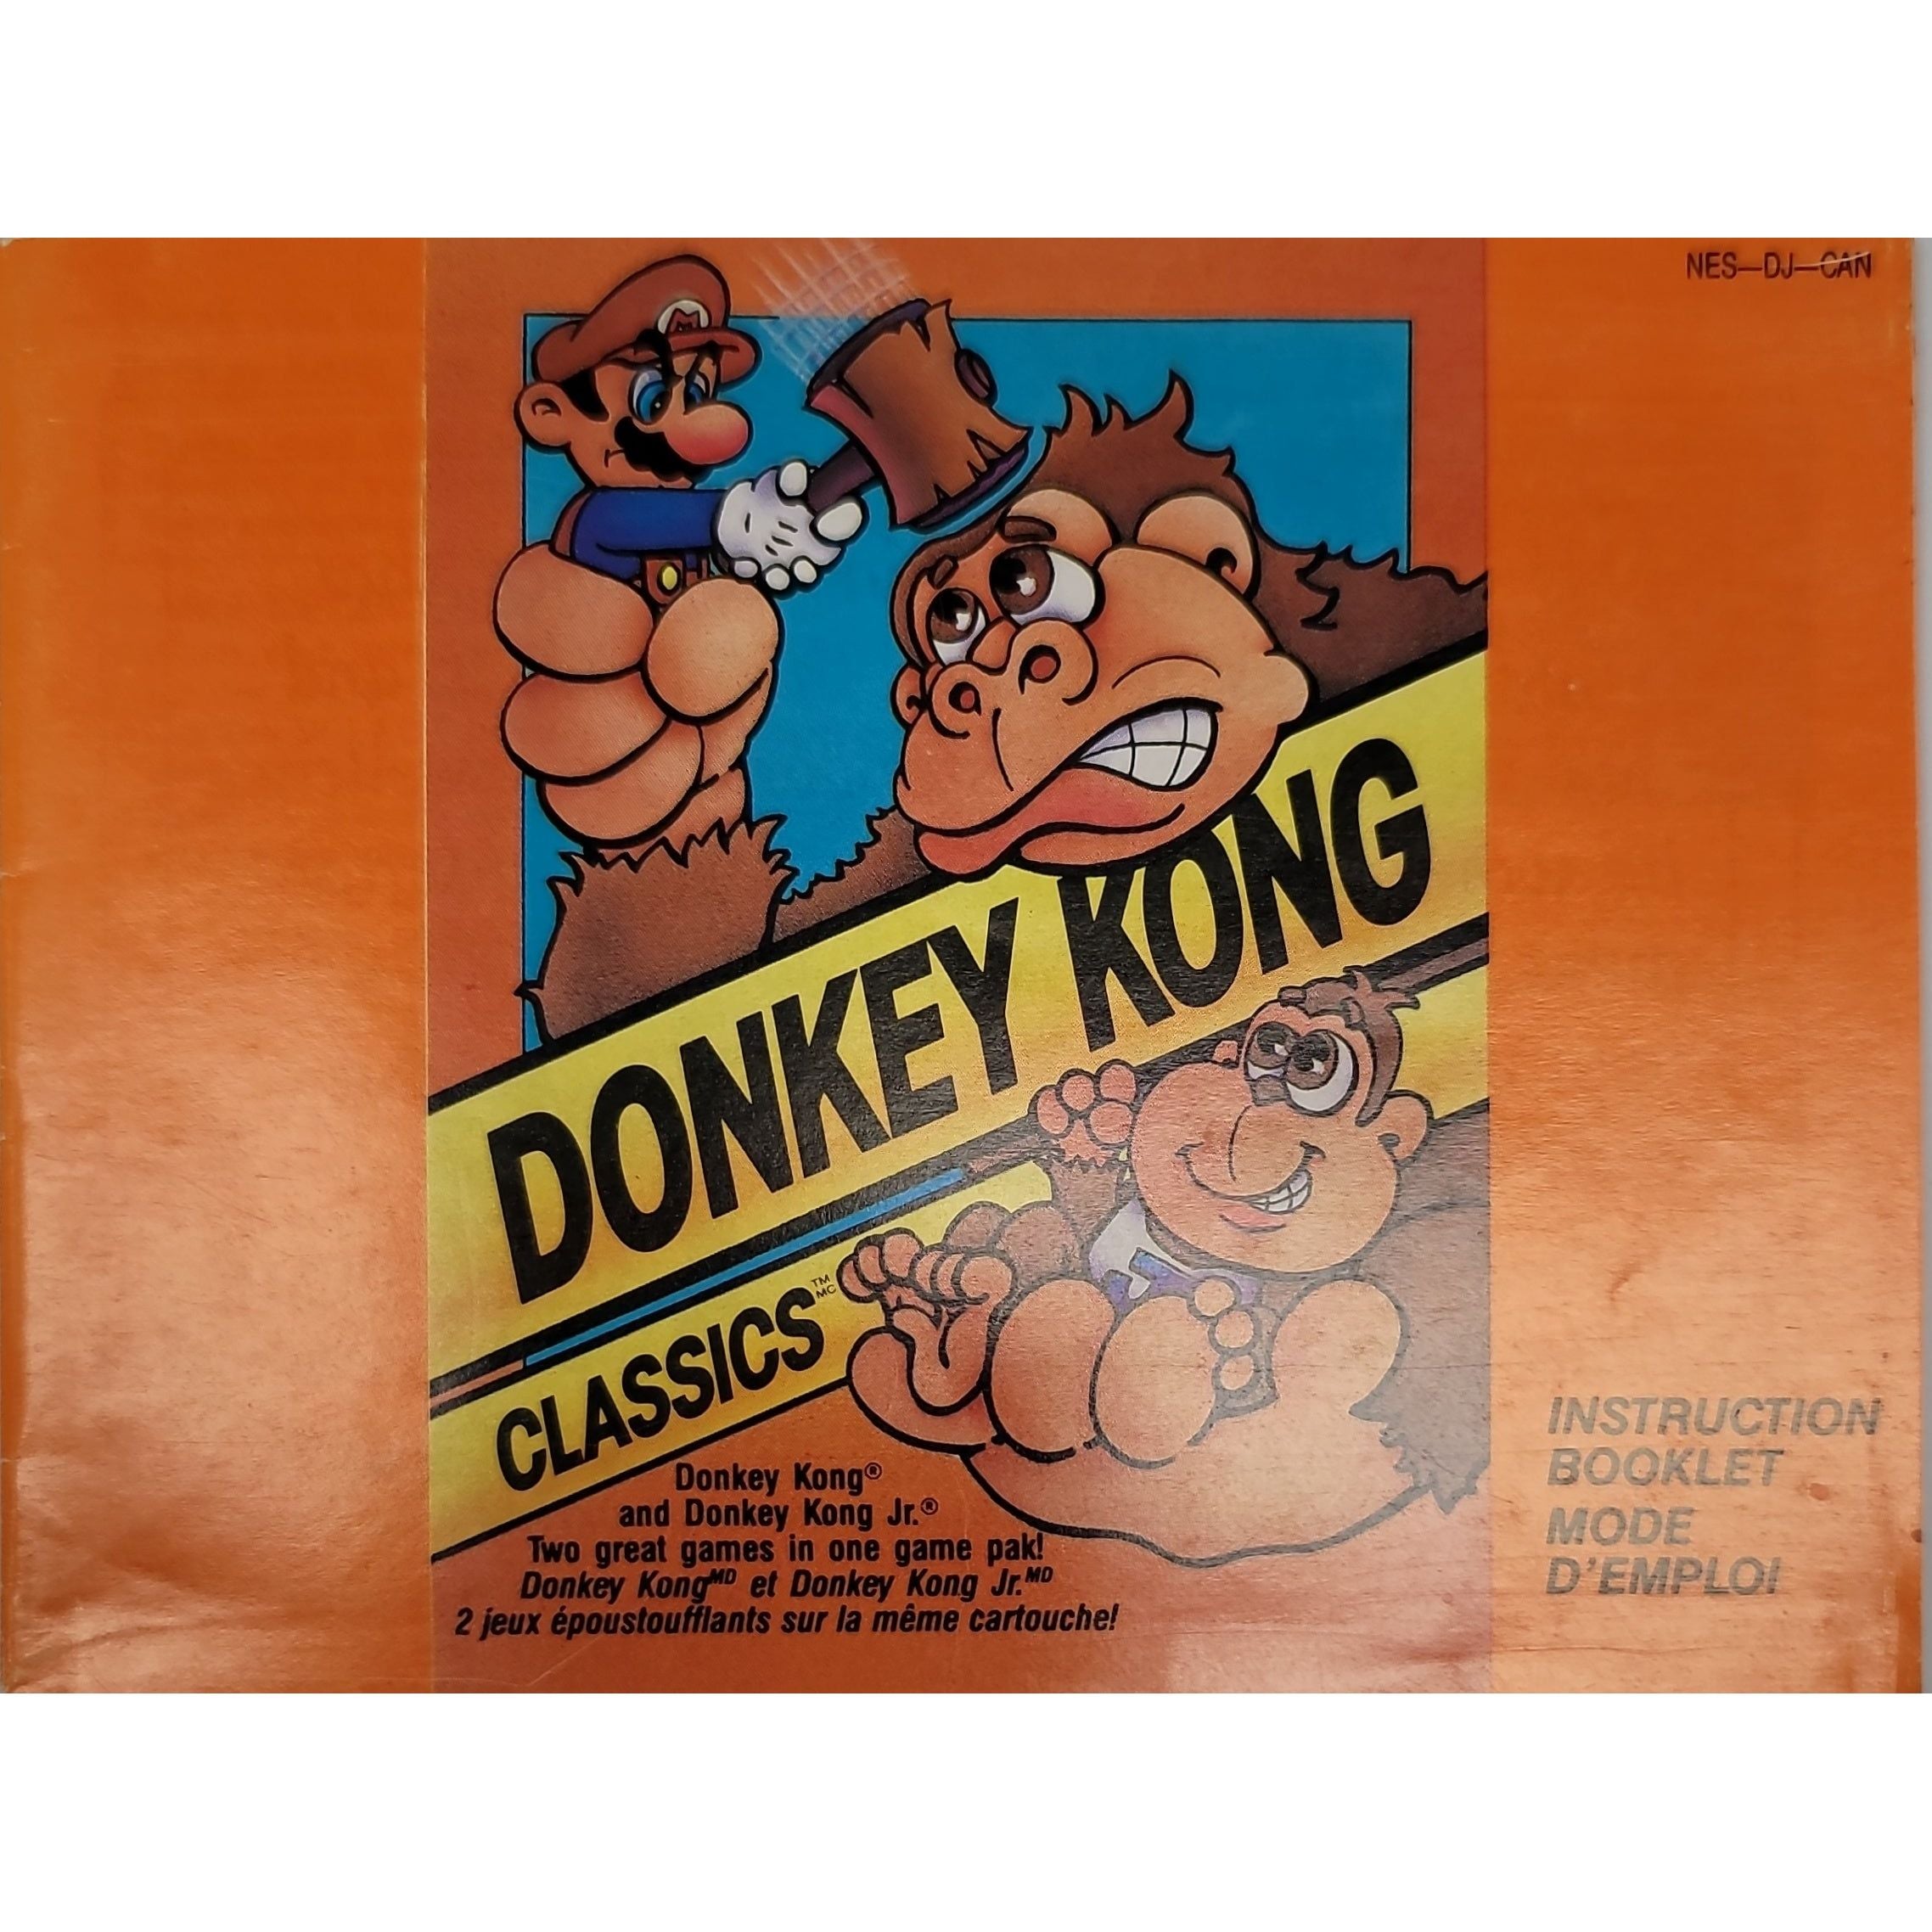 NES - Donkey Kong Classic (Manual)